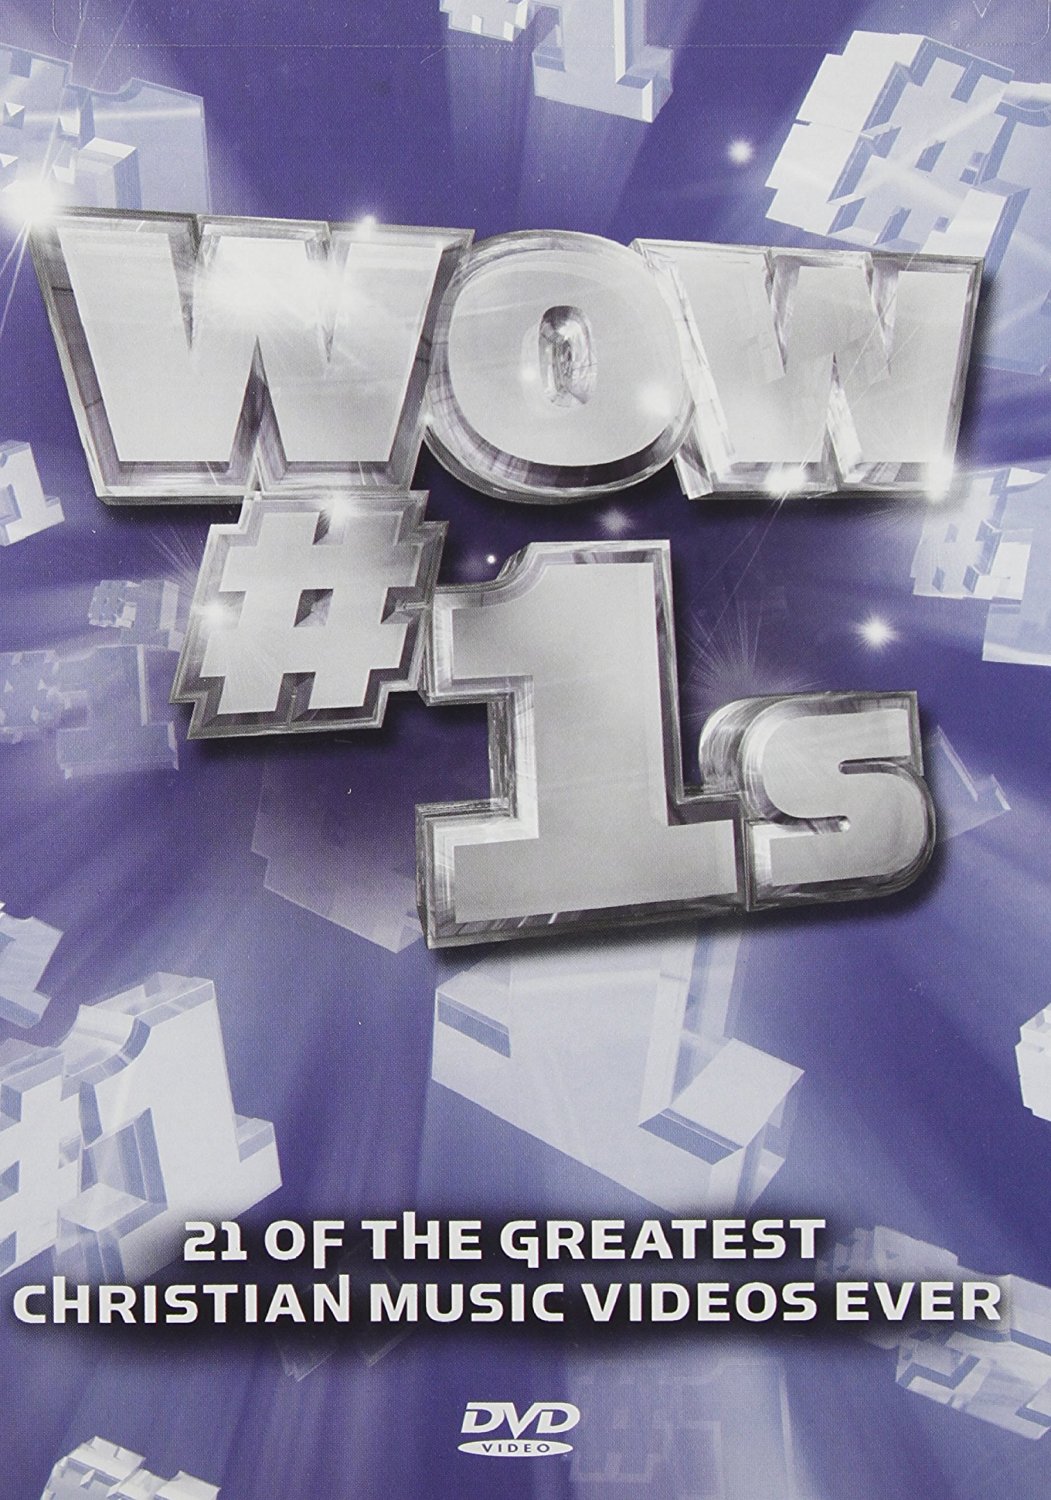 WOW #1s (DVD)(수입)